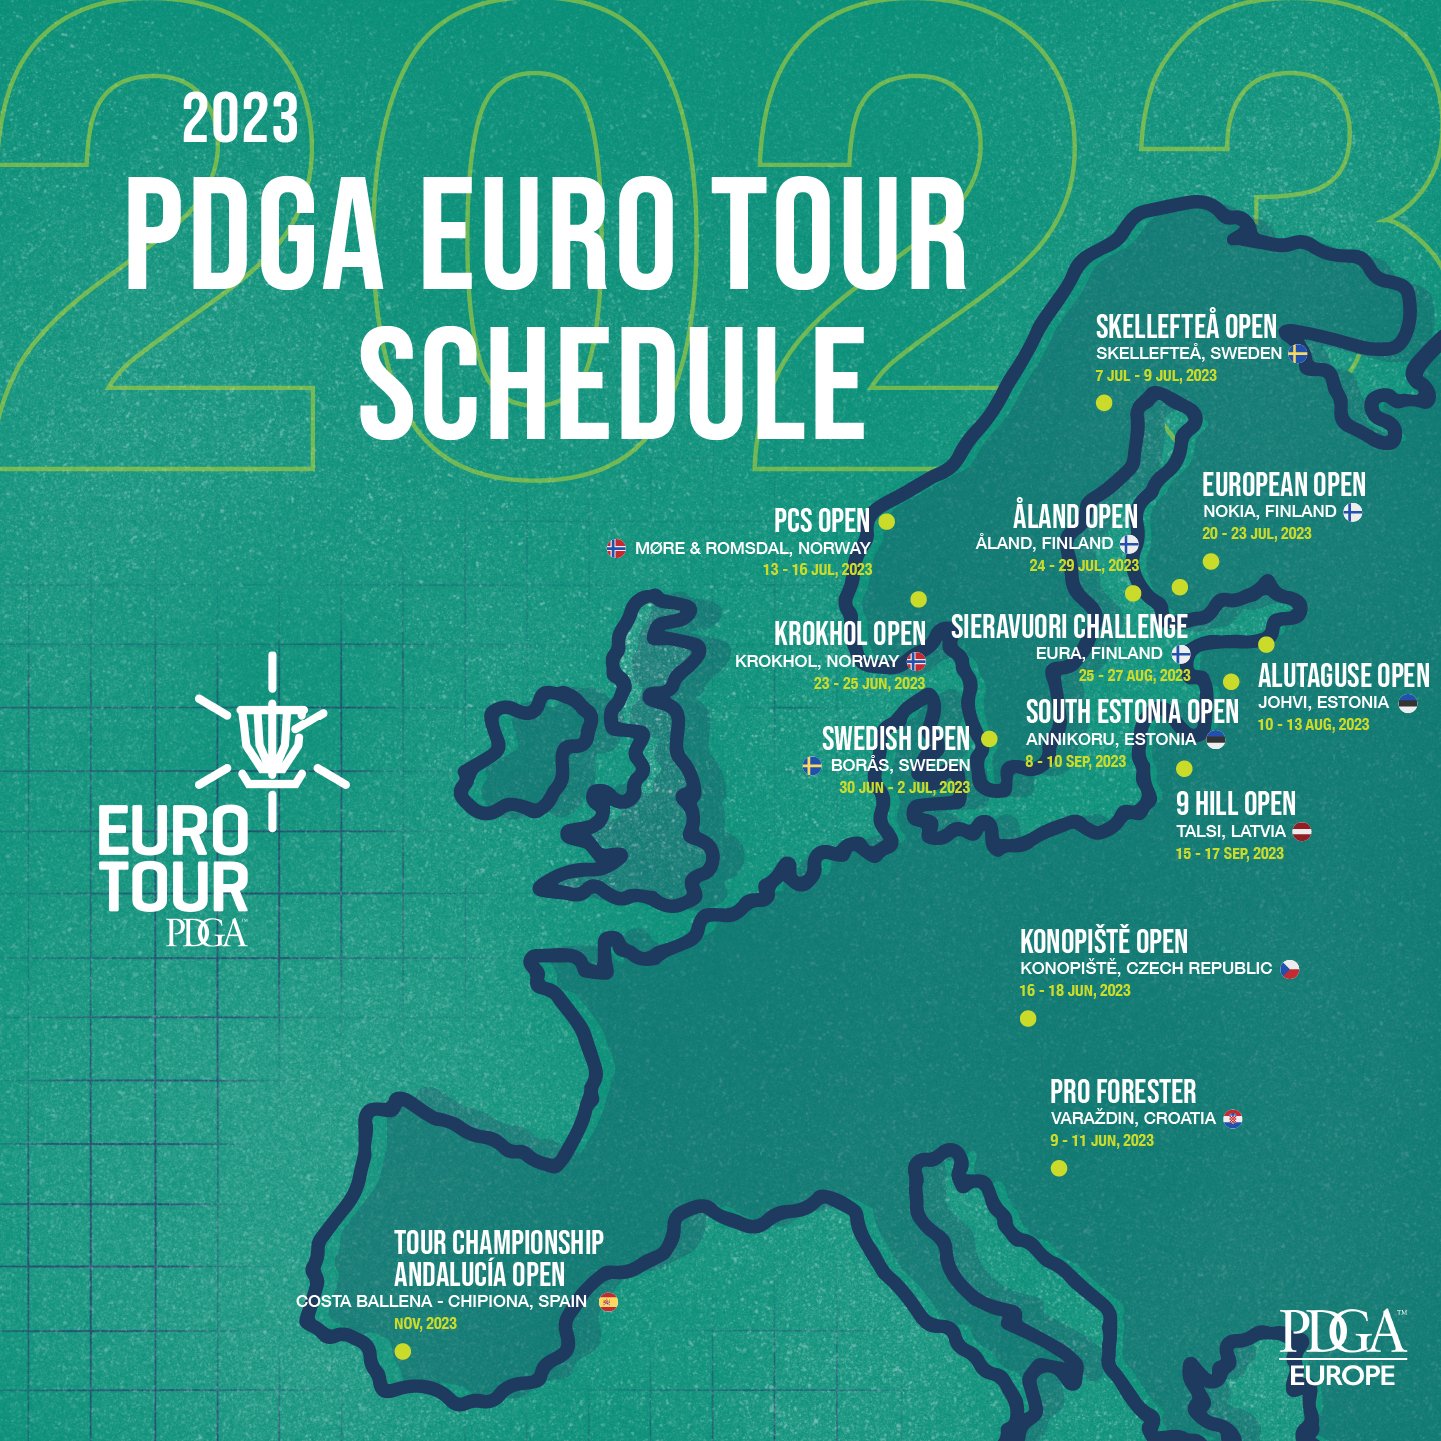 2023 PDGA Euro Tour Schedule